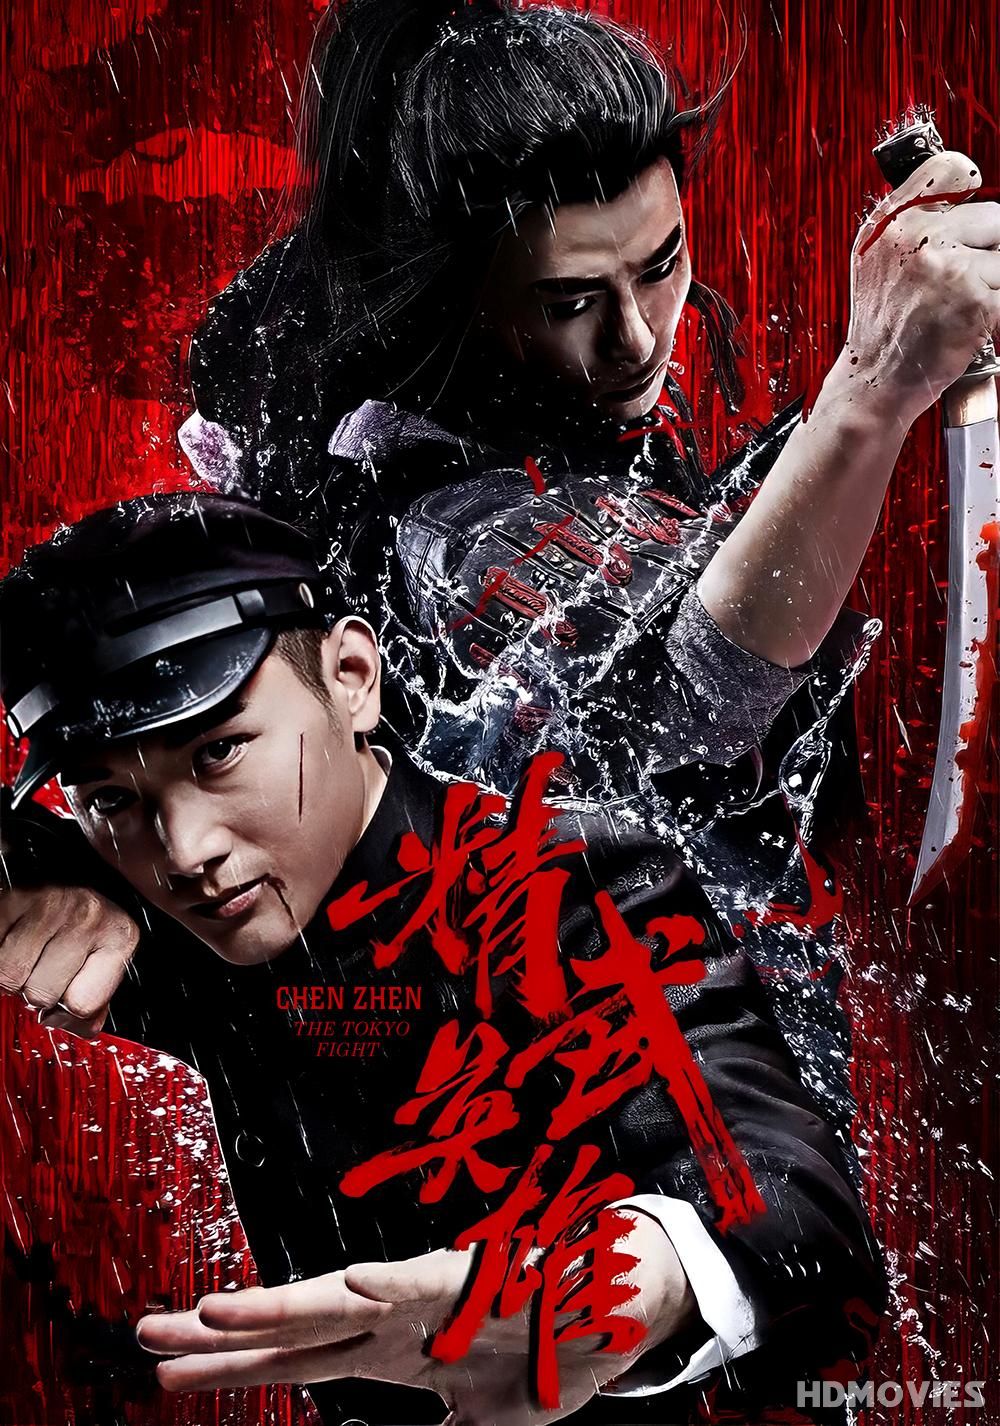 Chen Zhen The Tokyo Fight (2019) Hindi Dubbed